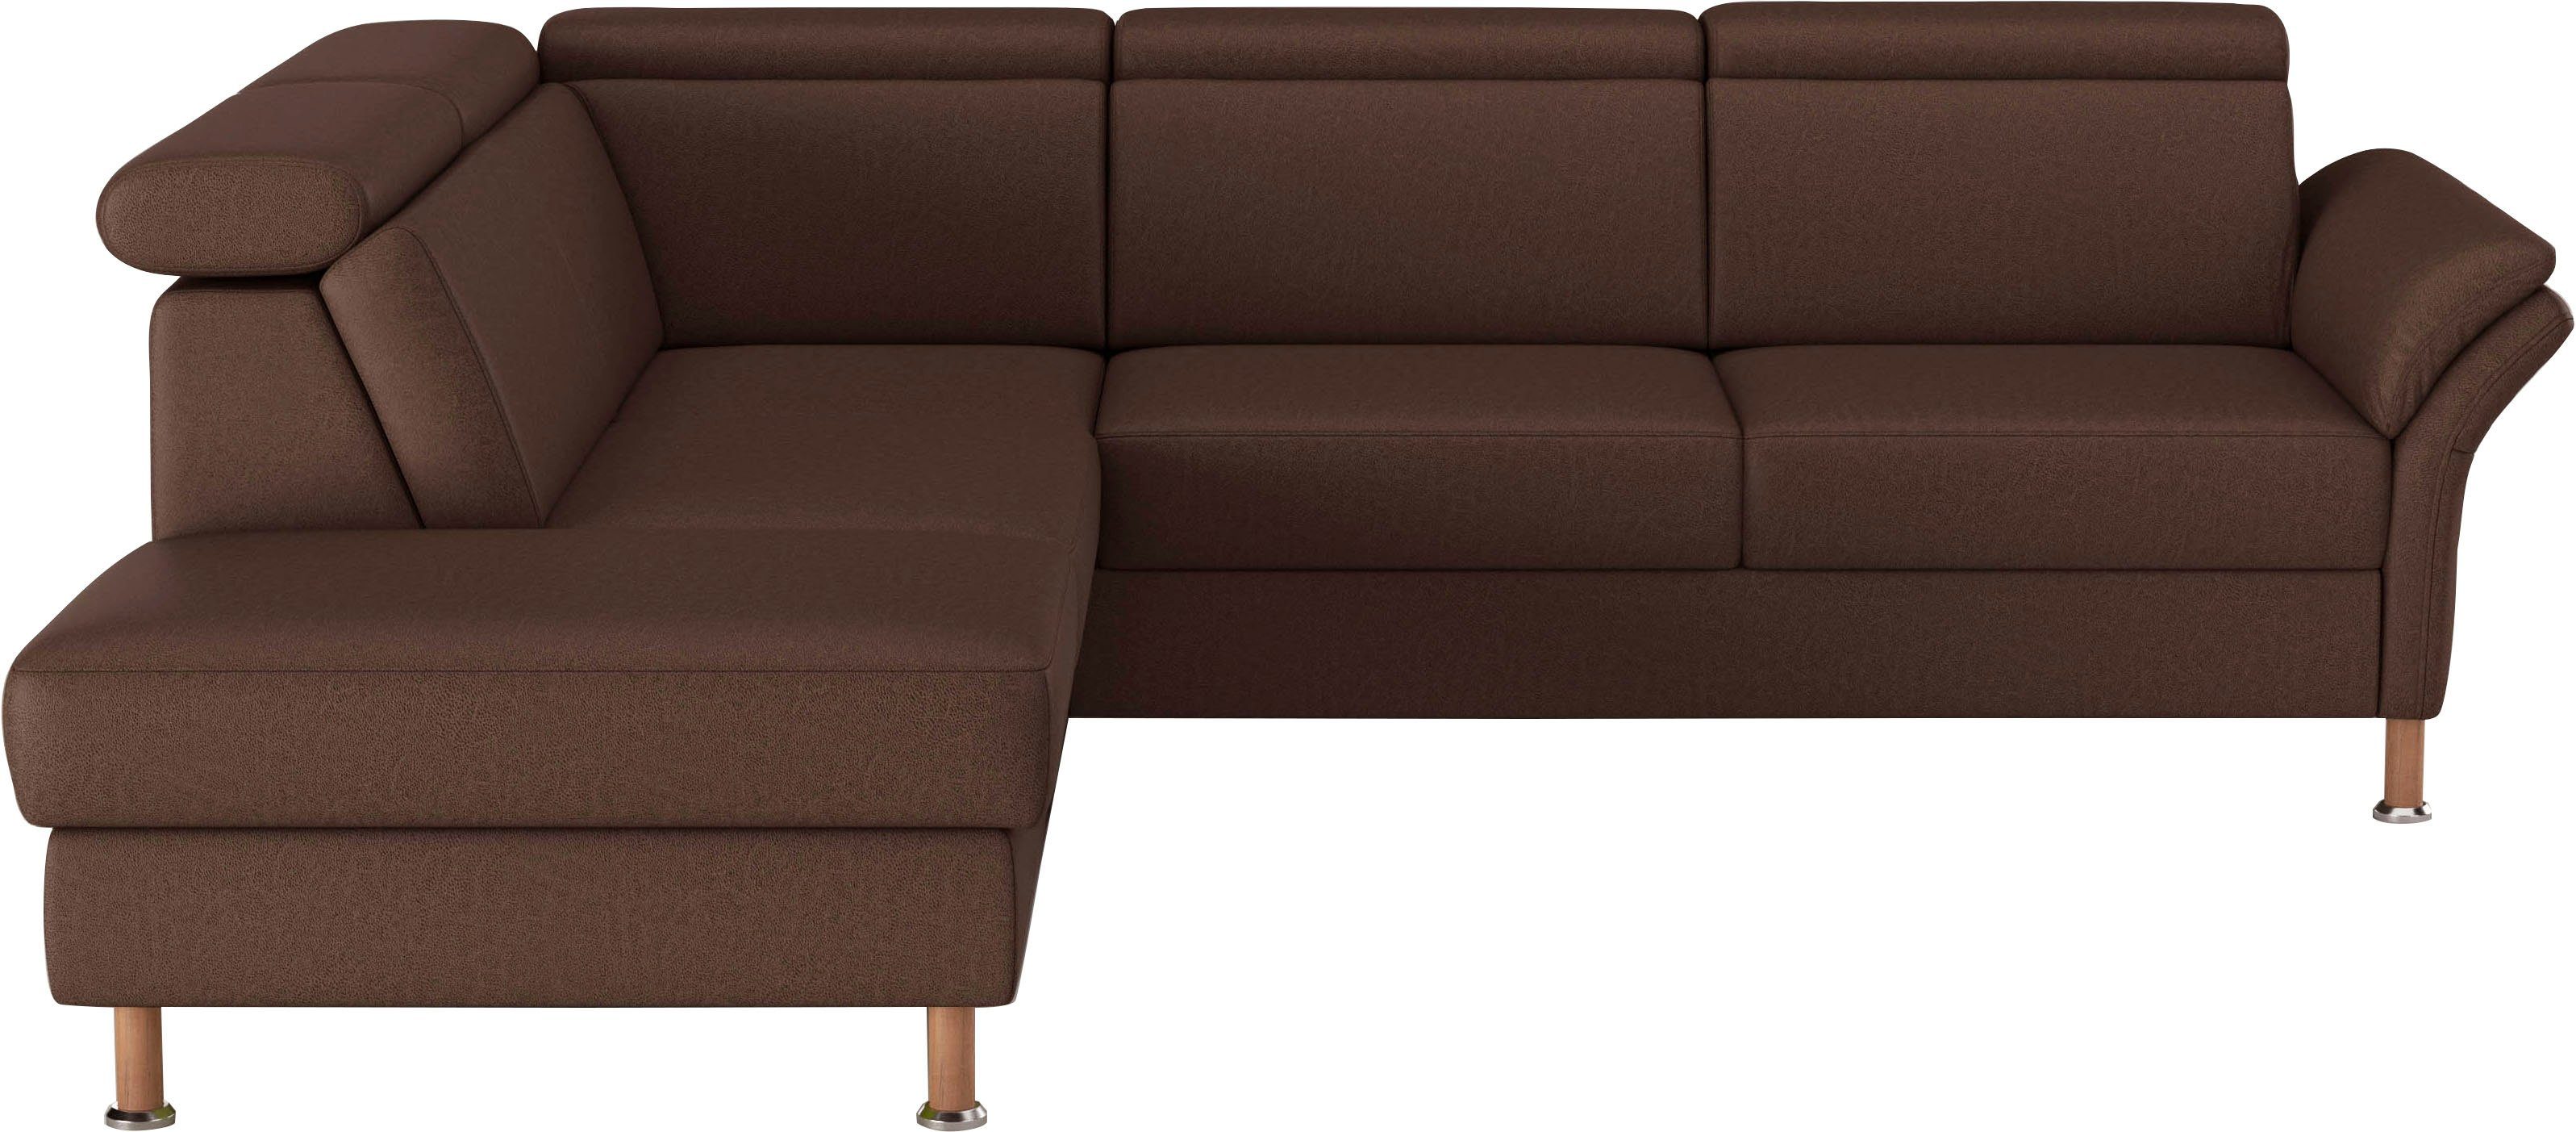 Home affaire Ecksofa Sitzer Sofa 2,5- im Relaxfunktion motorisch mit Calypso,